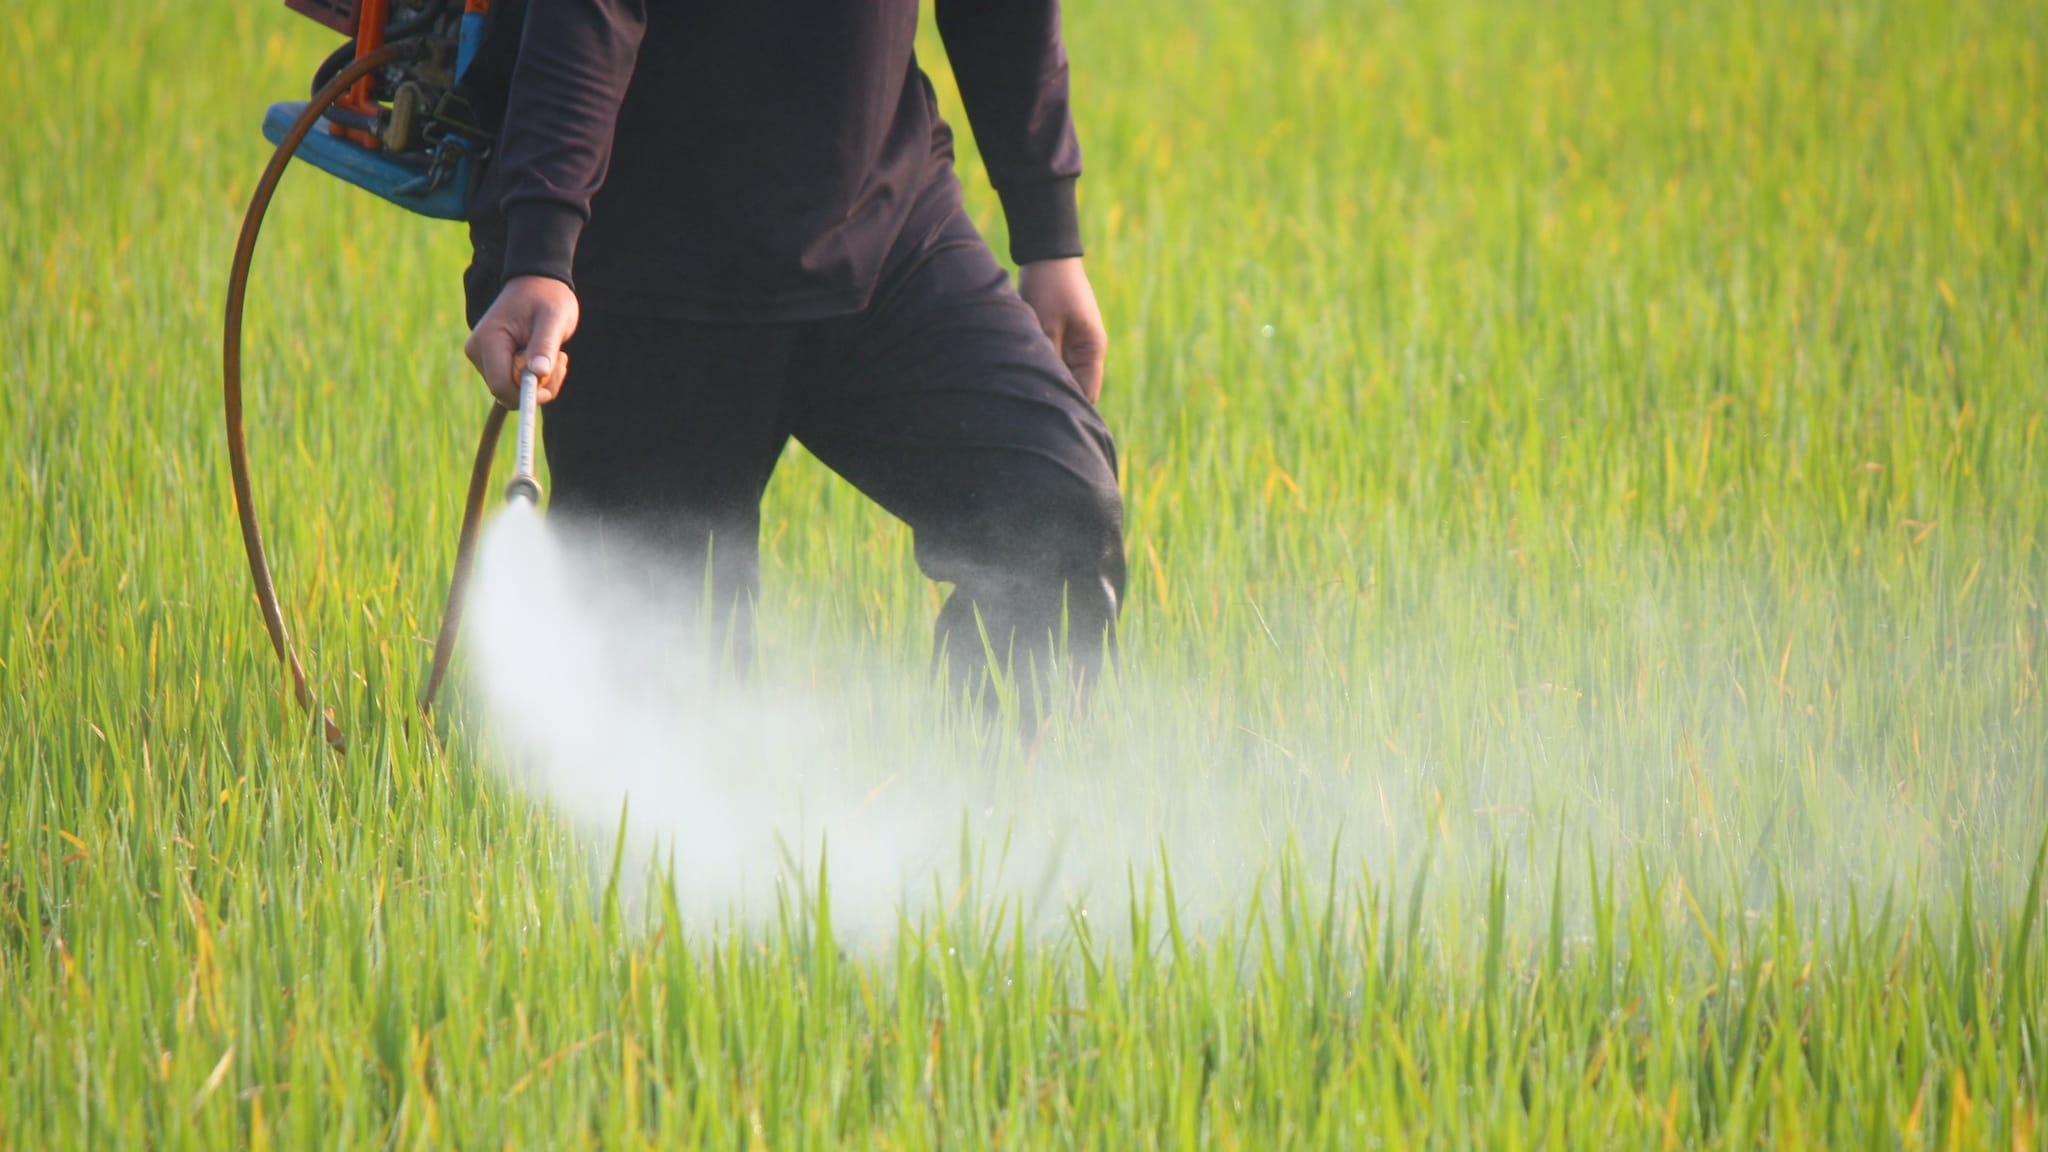 Worker spraying pesticide on crop.